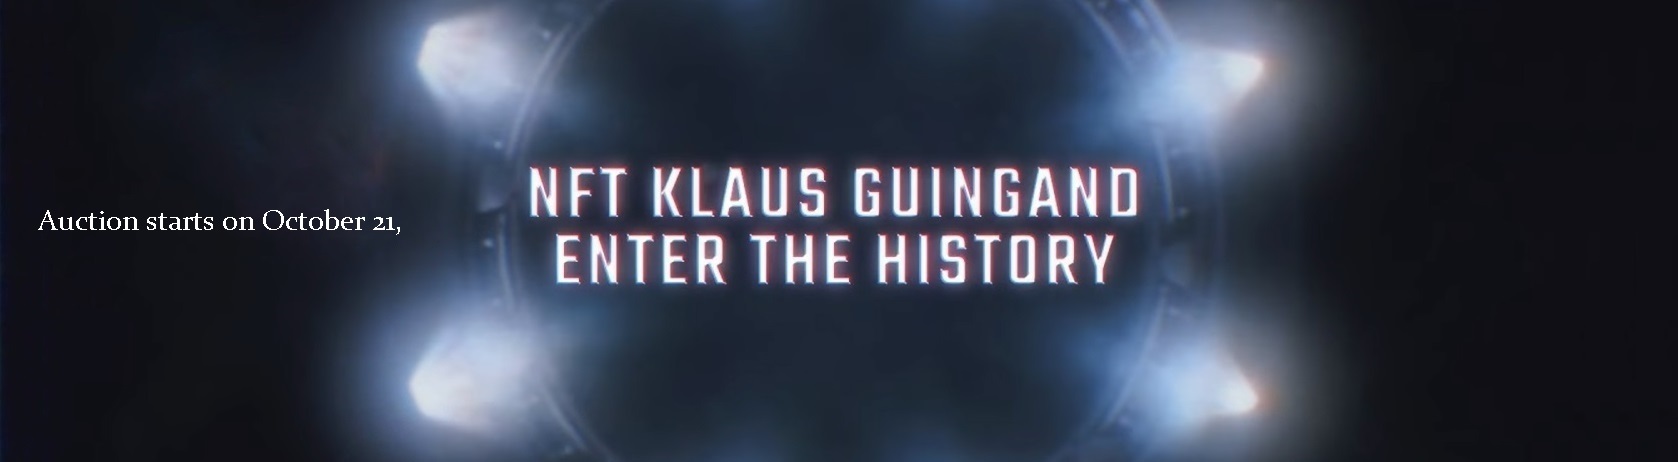 Klaus_Guingand banner